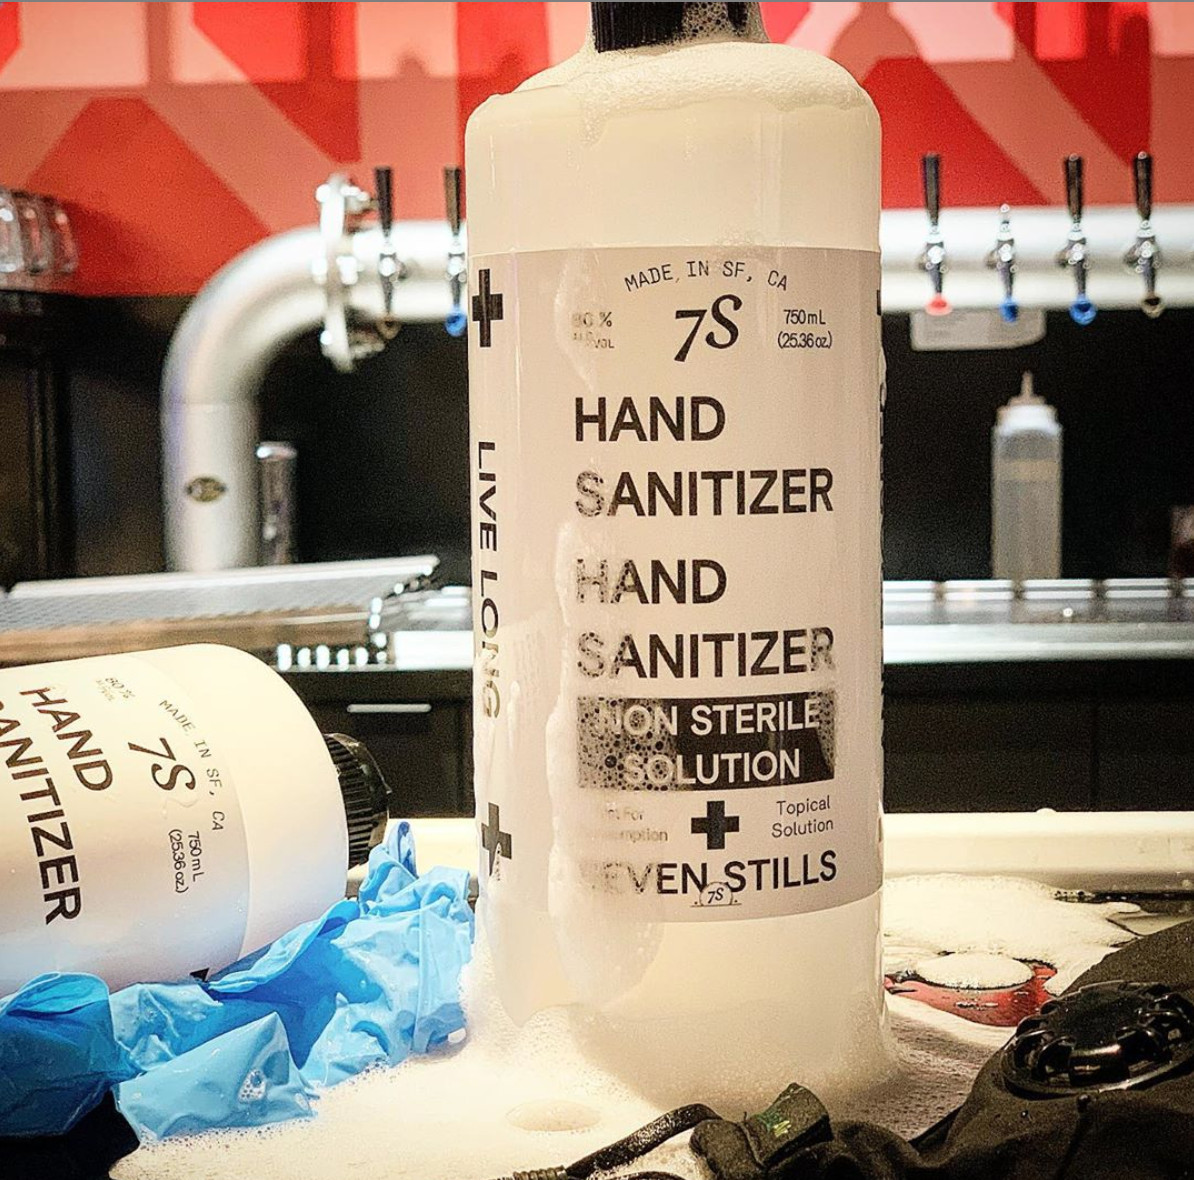 Hand sanitizer at Seven Stills